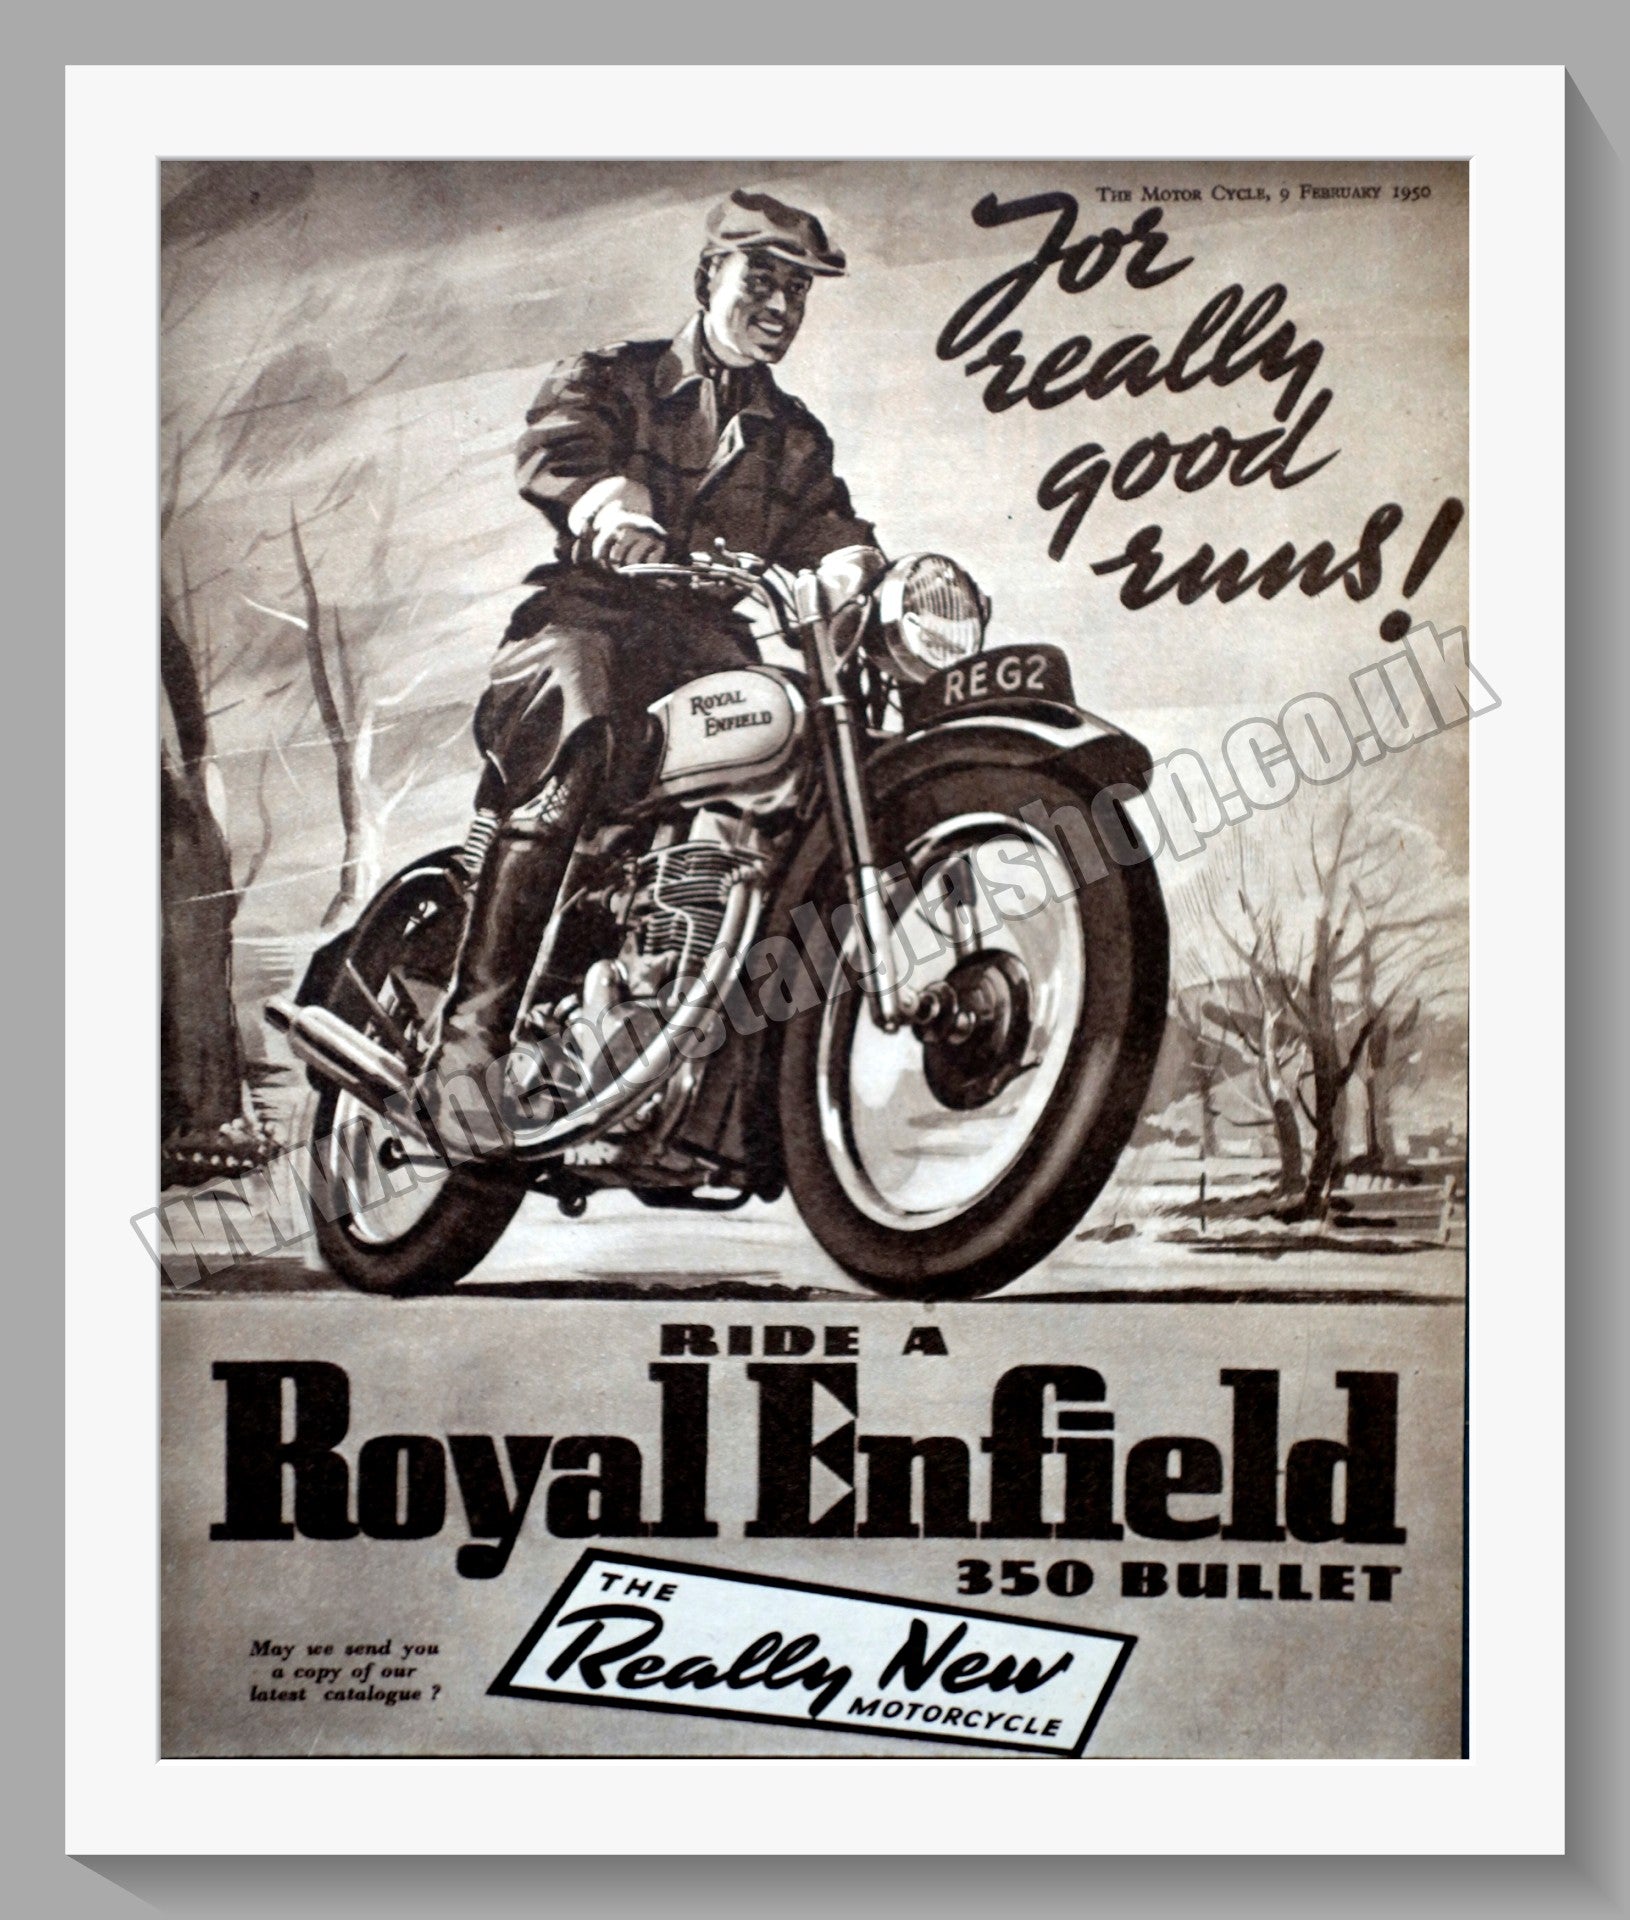 Royal Enfield 1950 Advertisement - 350 Bullet